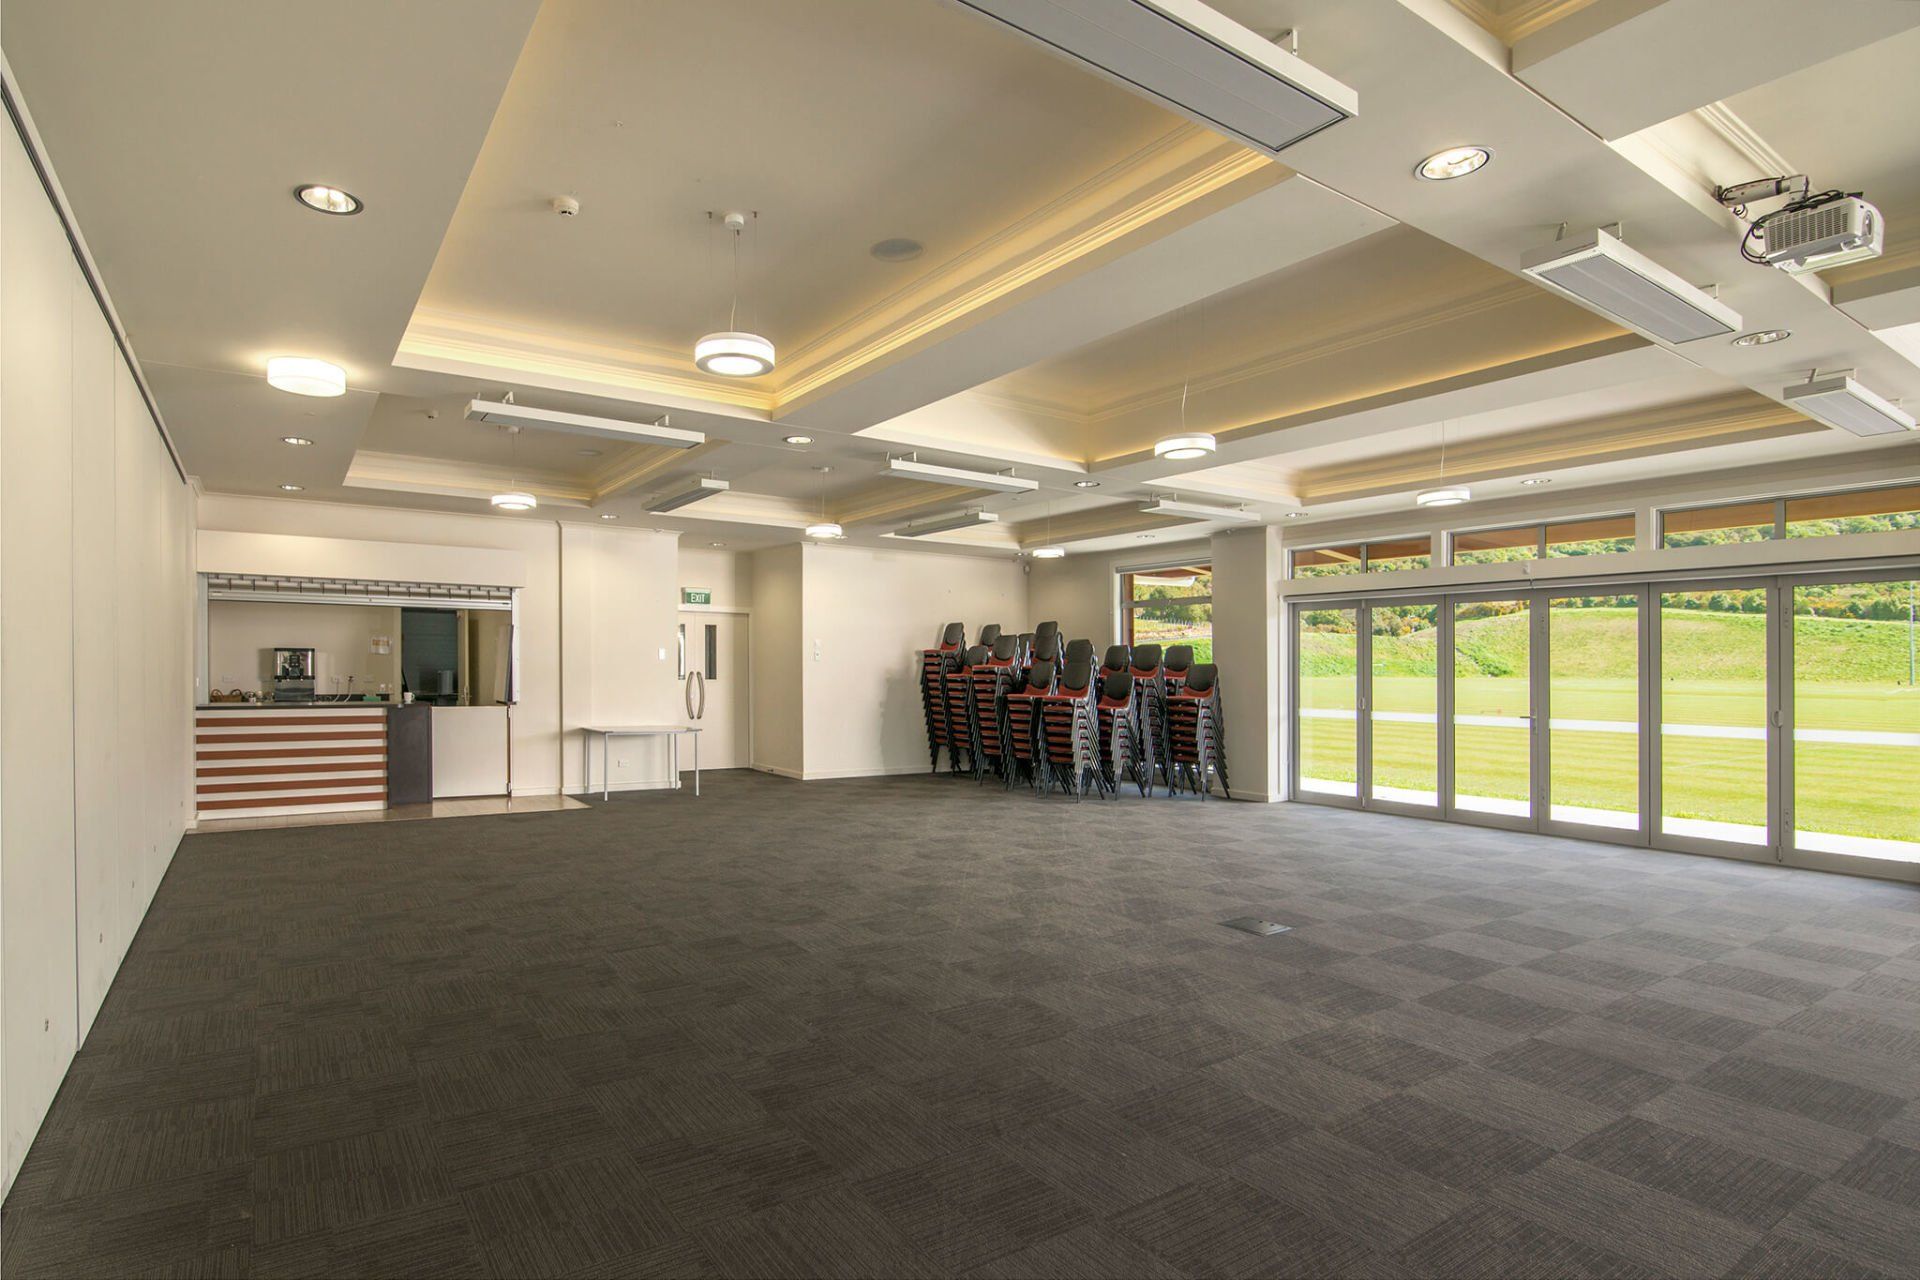 The Regal Room at Endeavour Park Pavilion in Picton